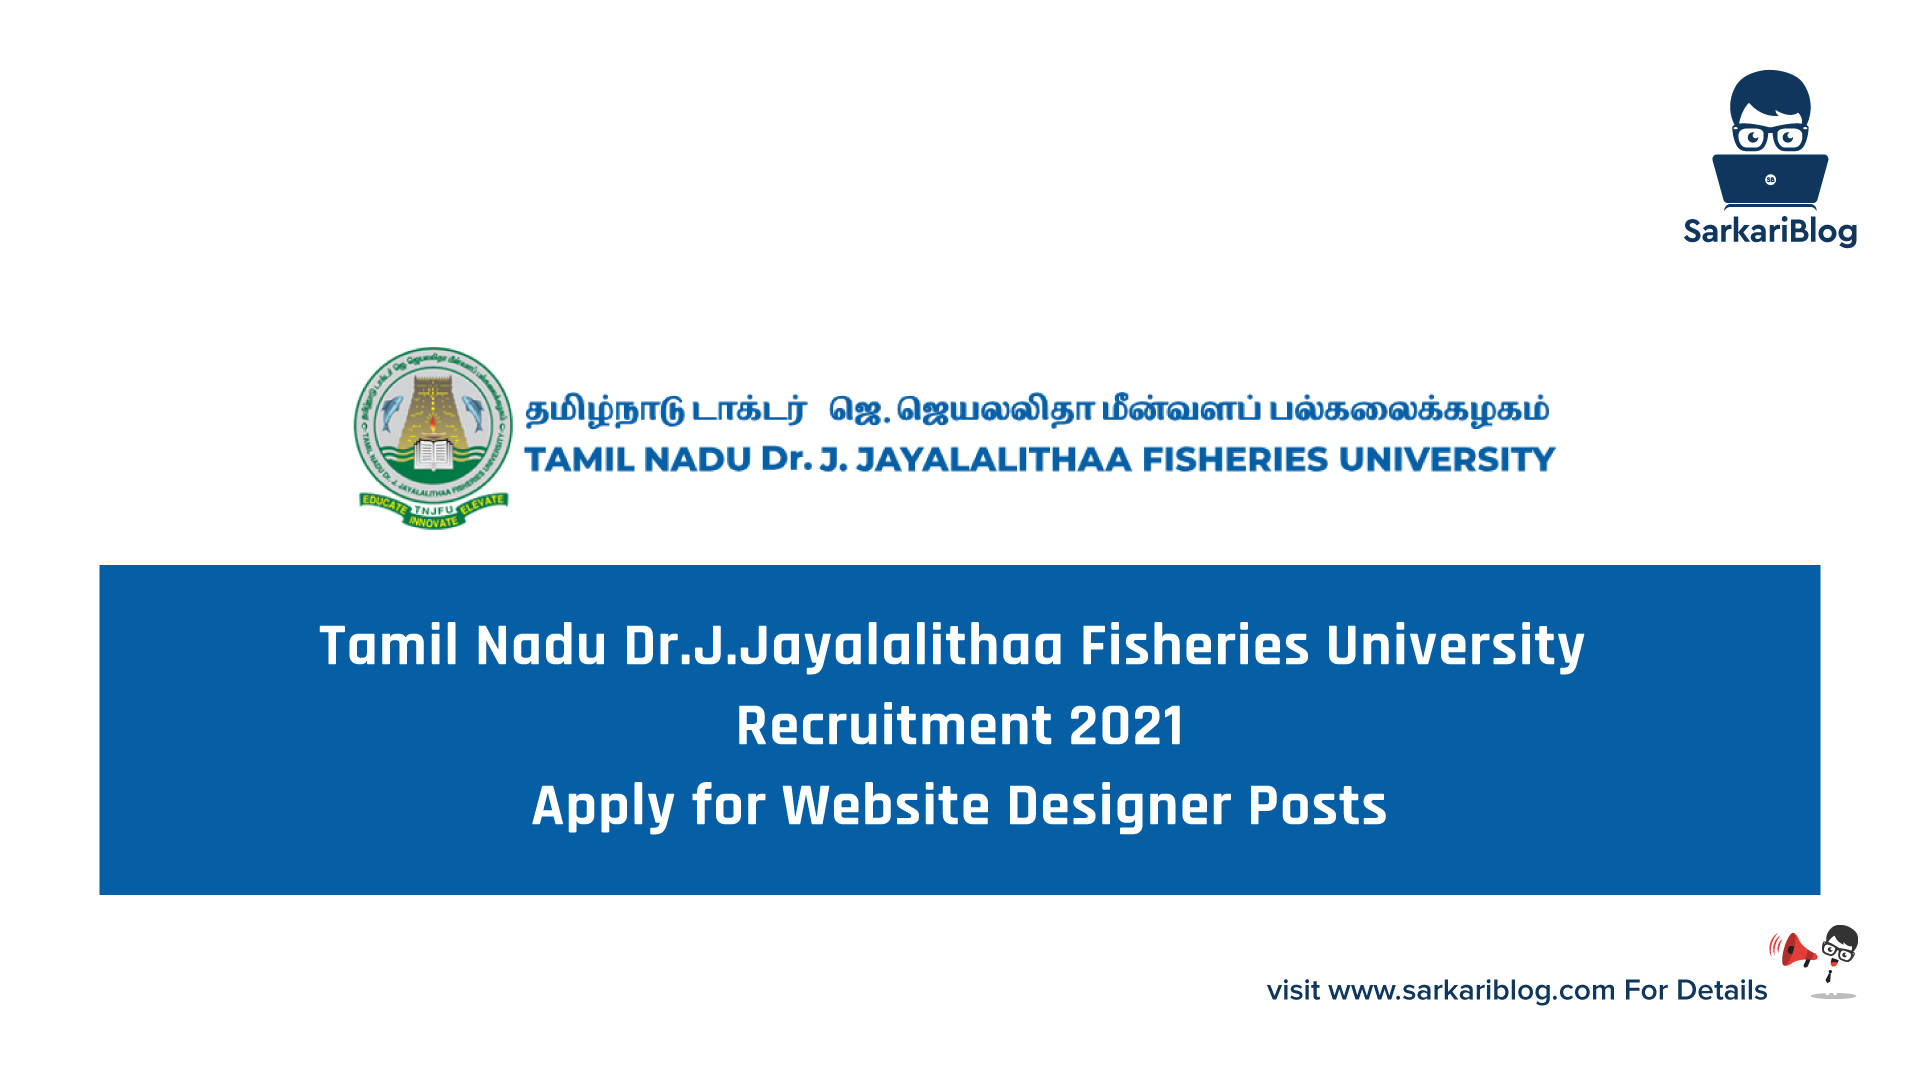 Tamil Nadu Dr.J.Jayalalithaa Fisheries University Recruitment 2021 – Apply for Website Designer Posts